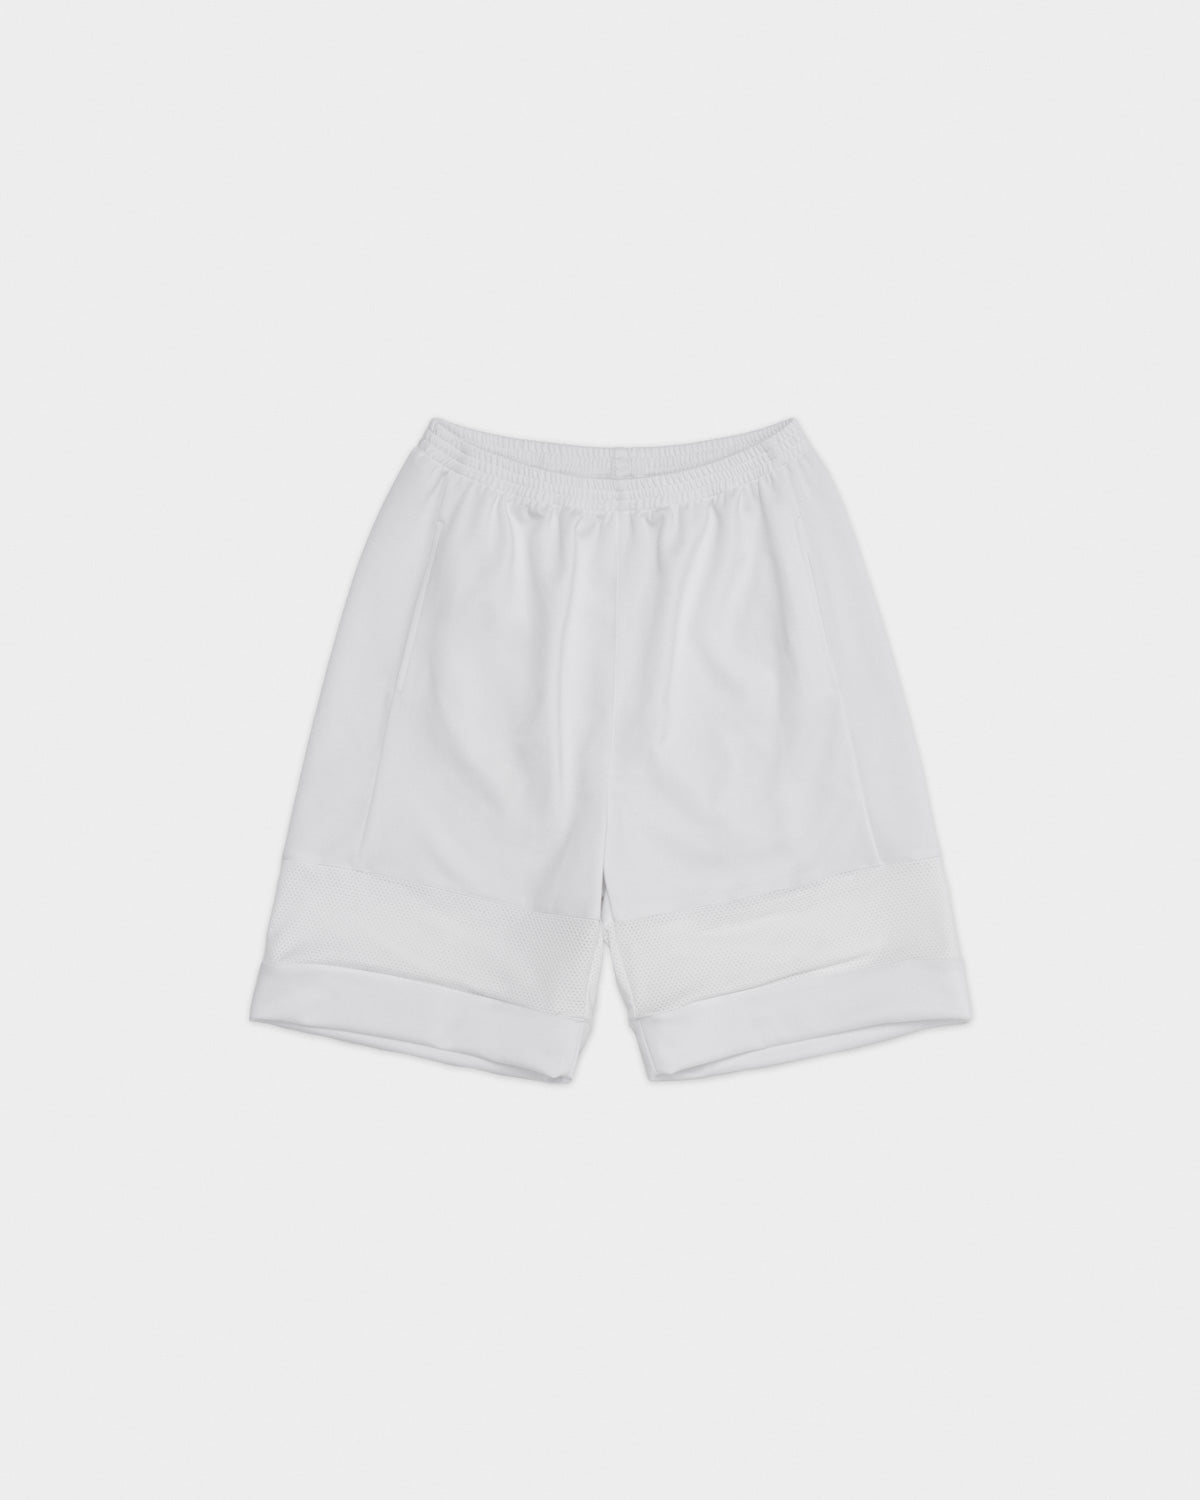 White Hoop Shorts